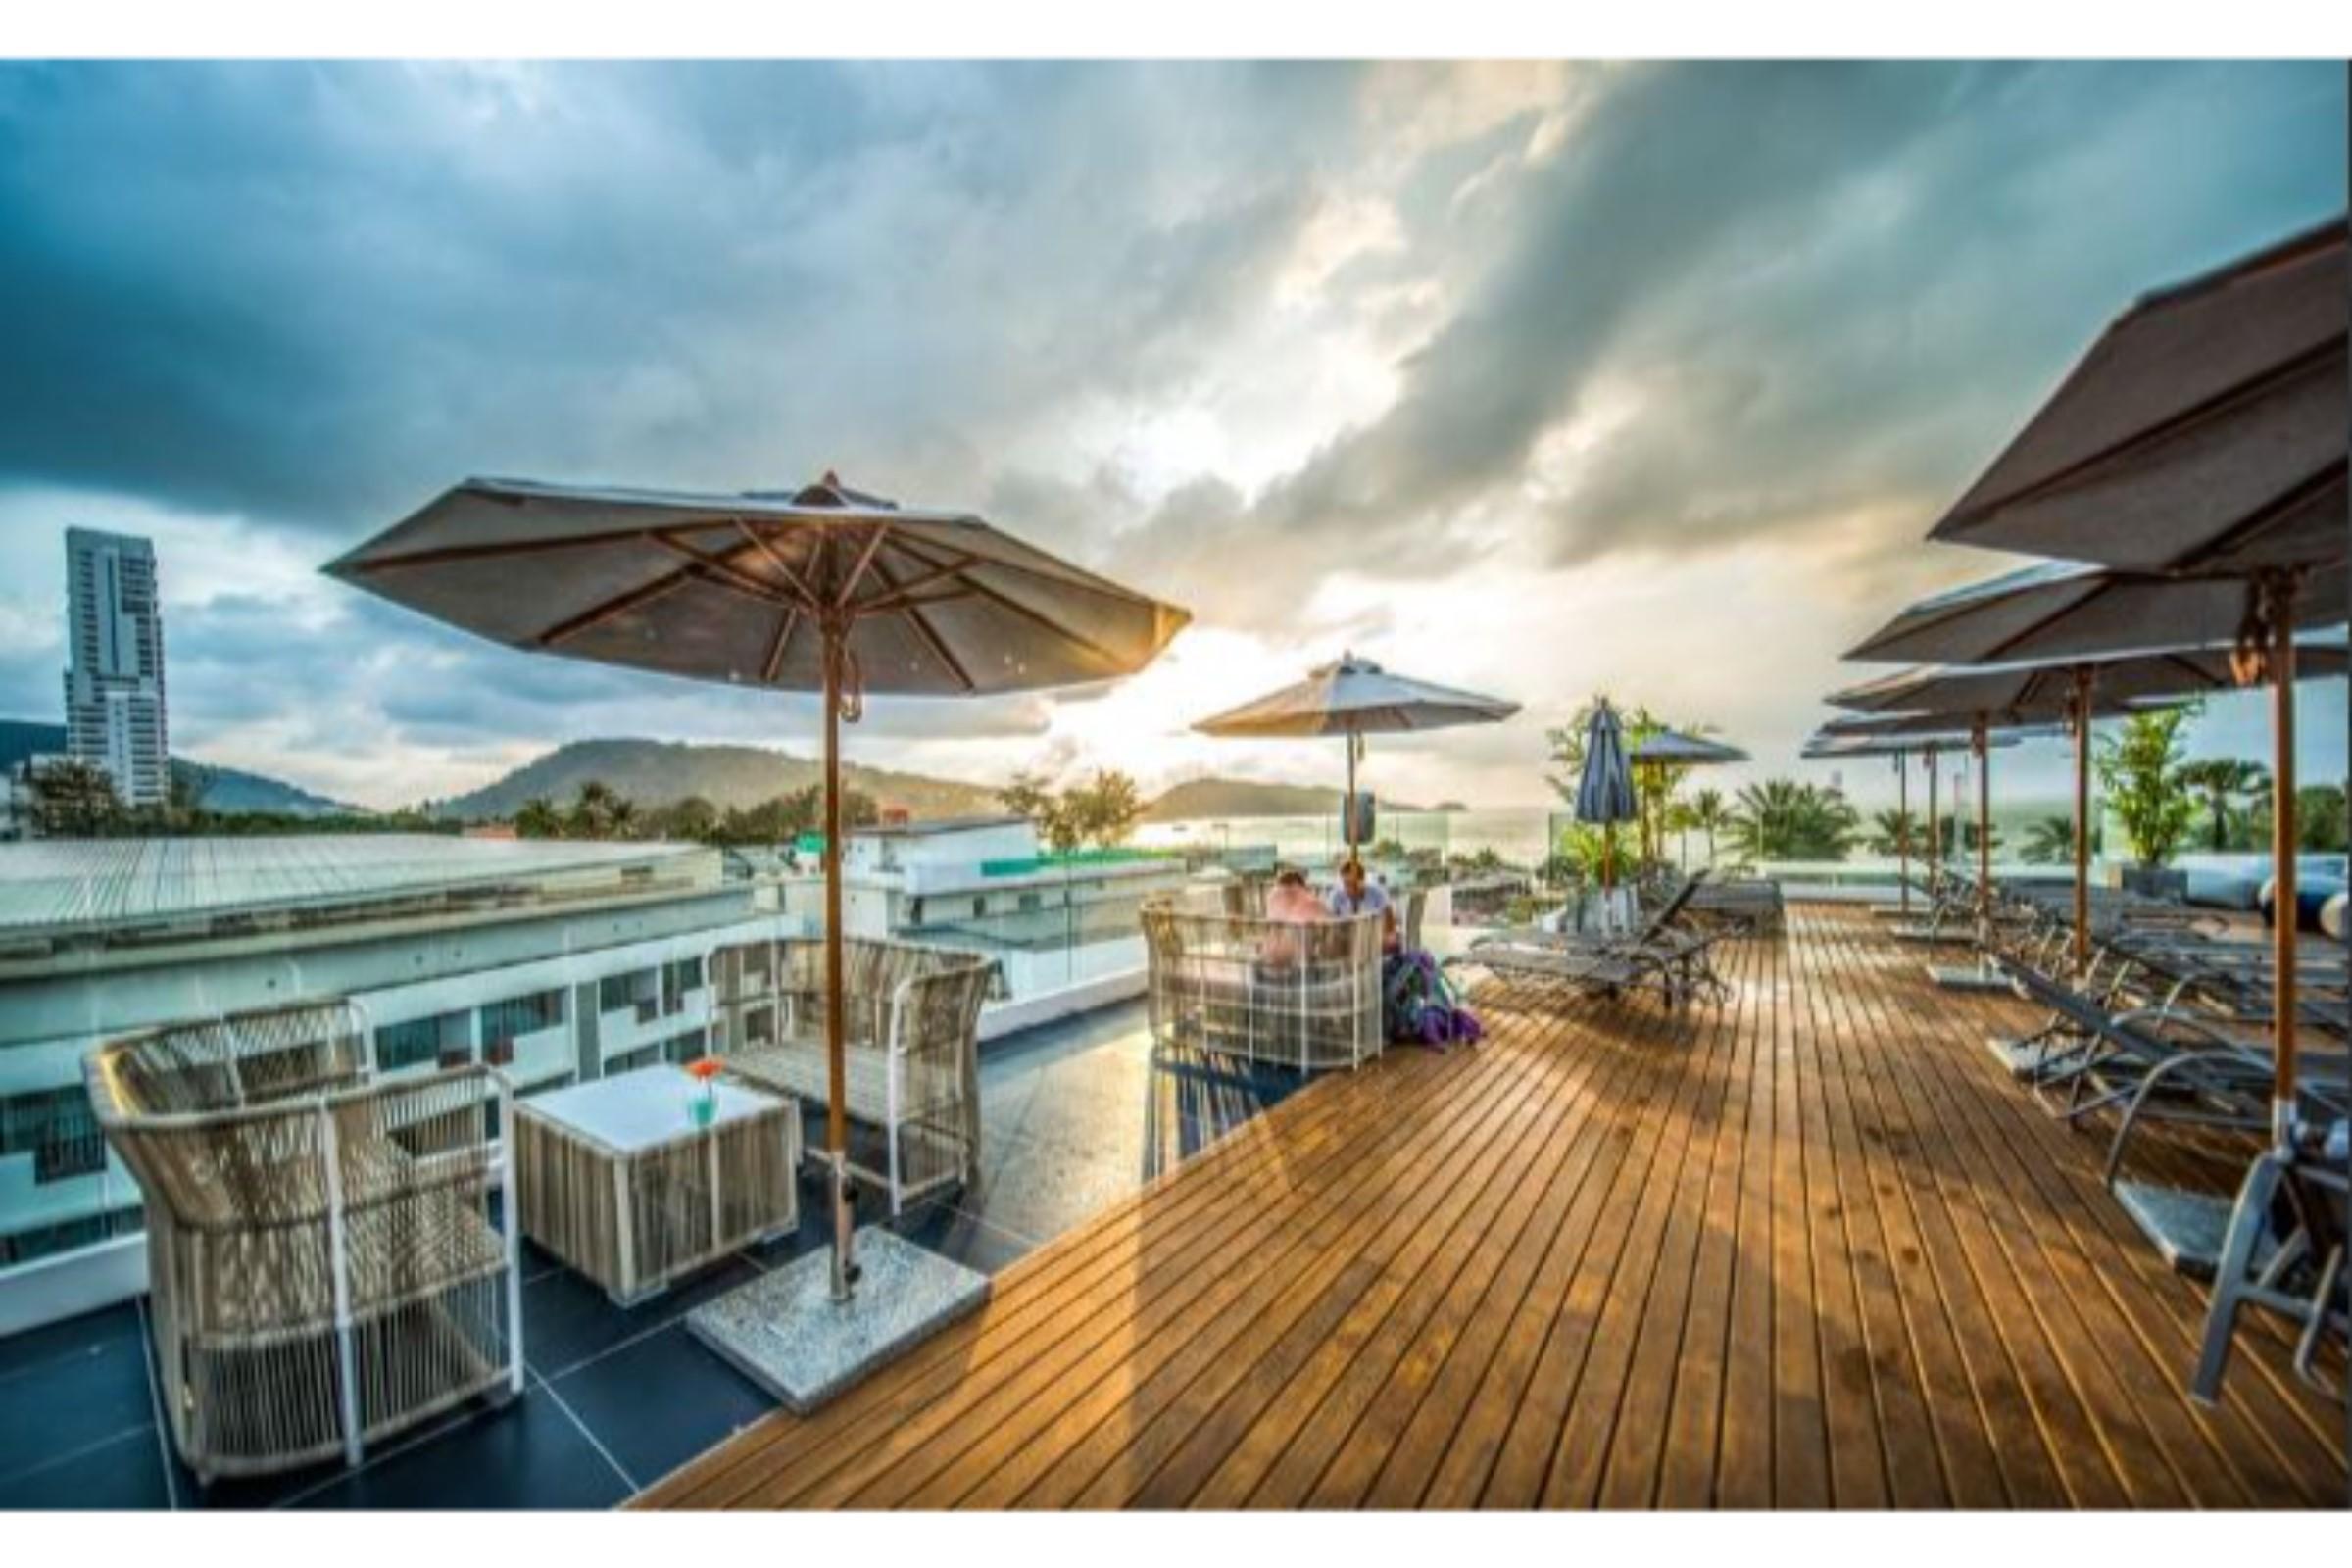 Hotel Clover Patong Phuket - Sha Plus Exterior photo